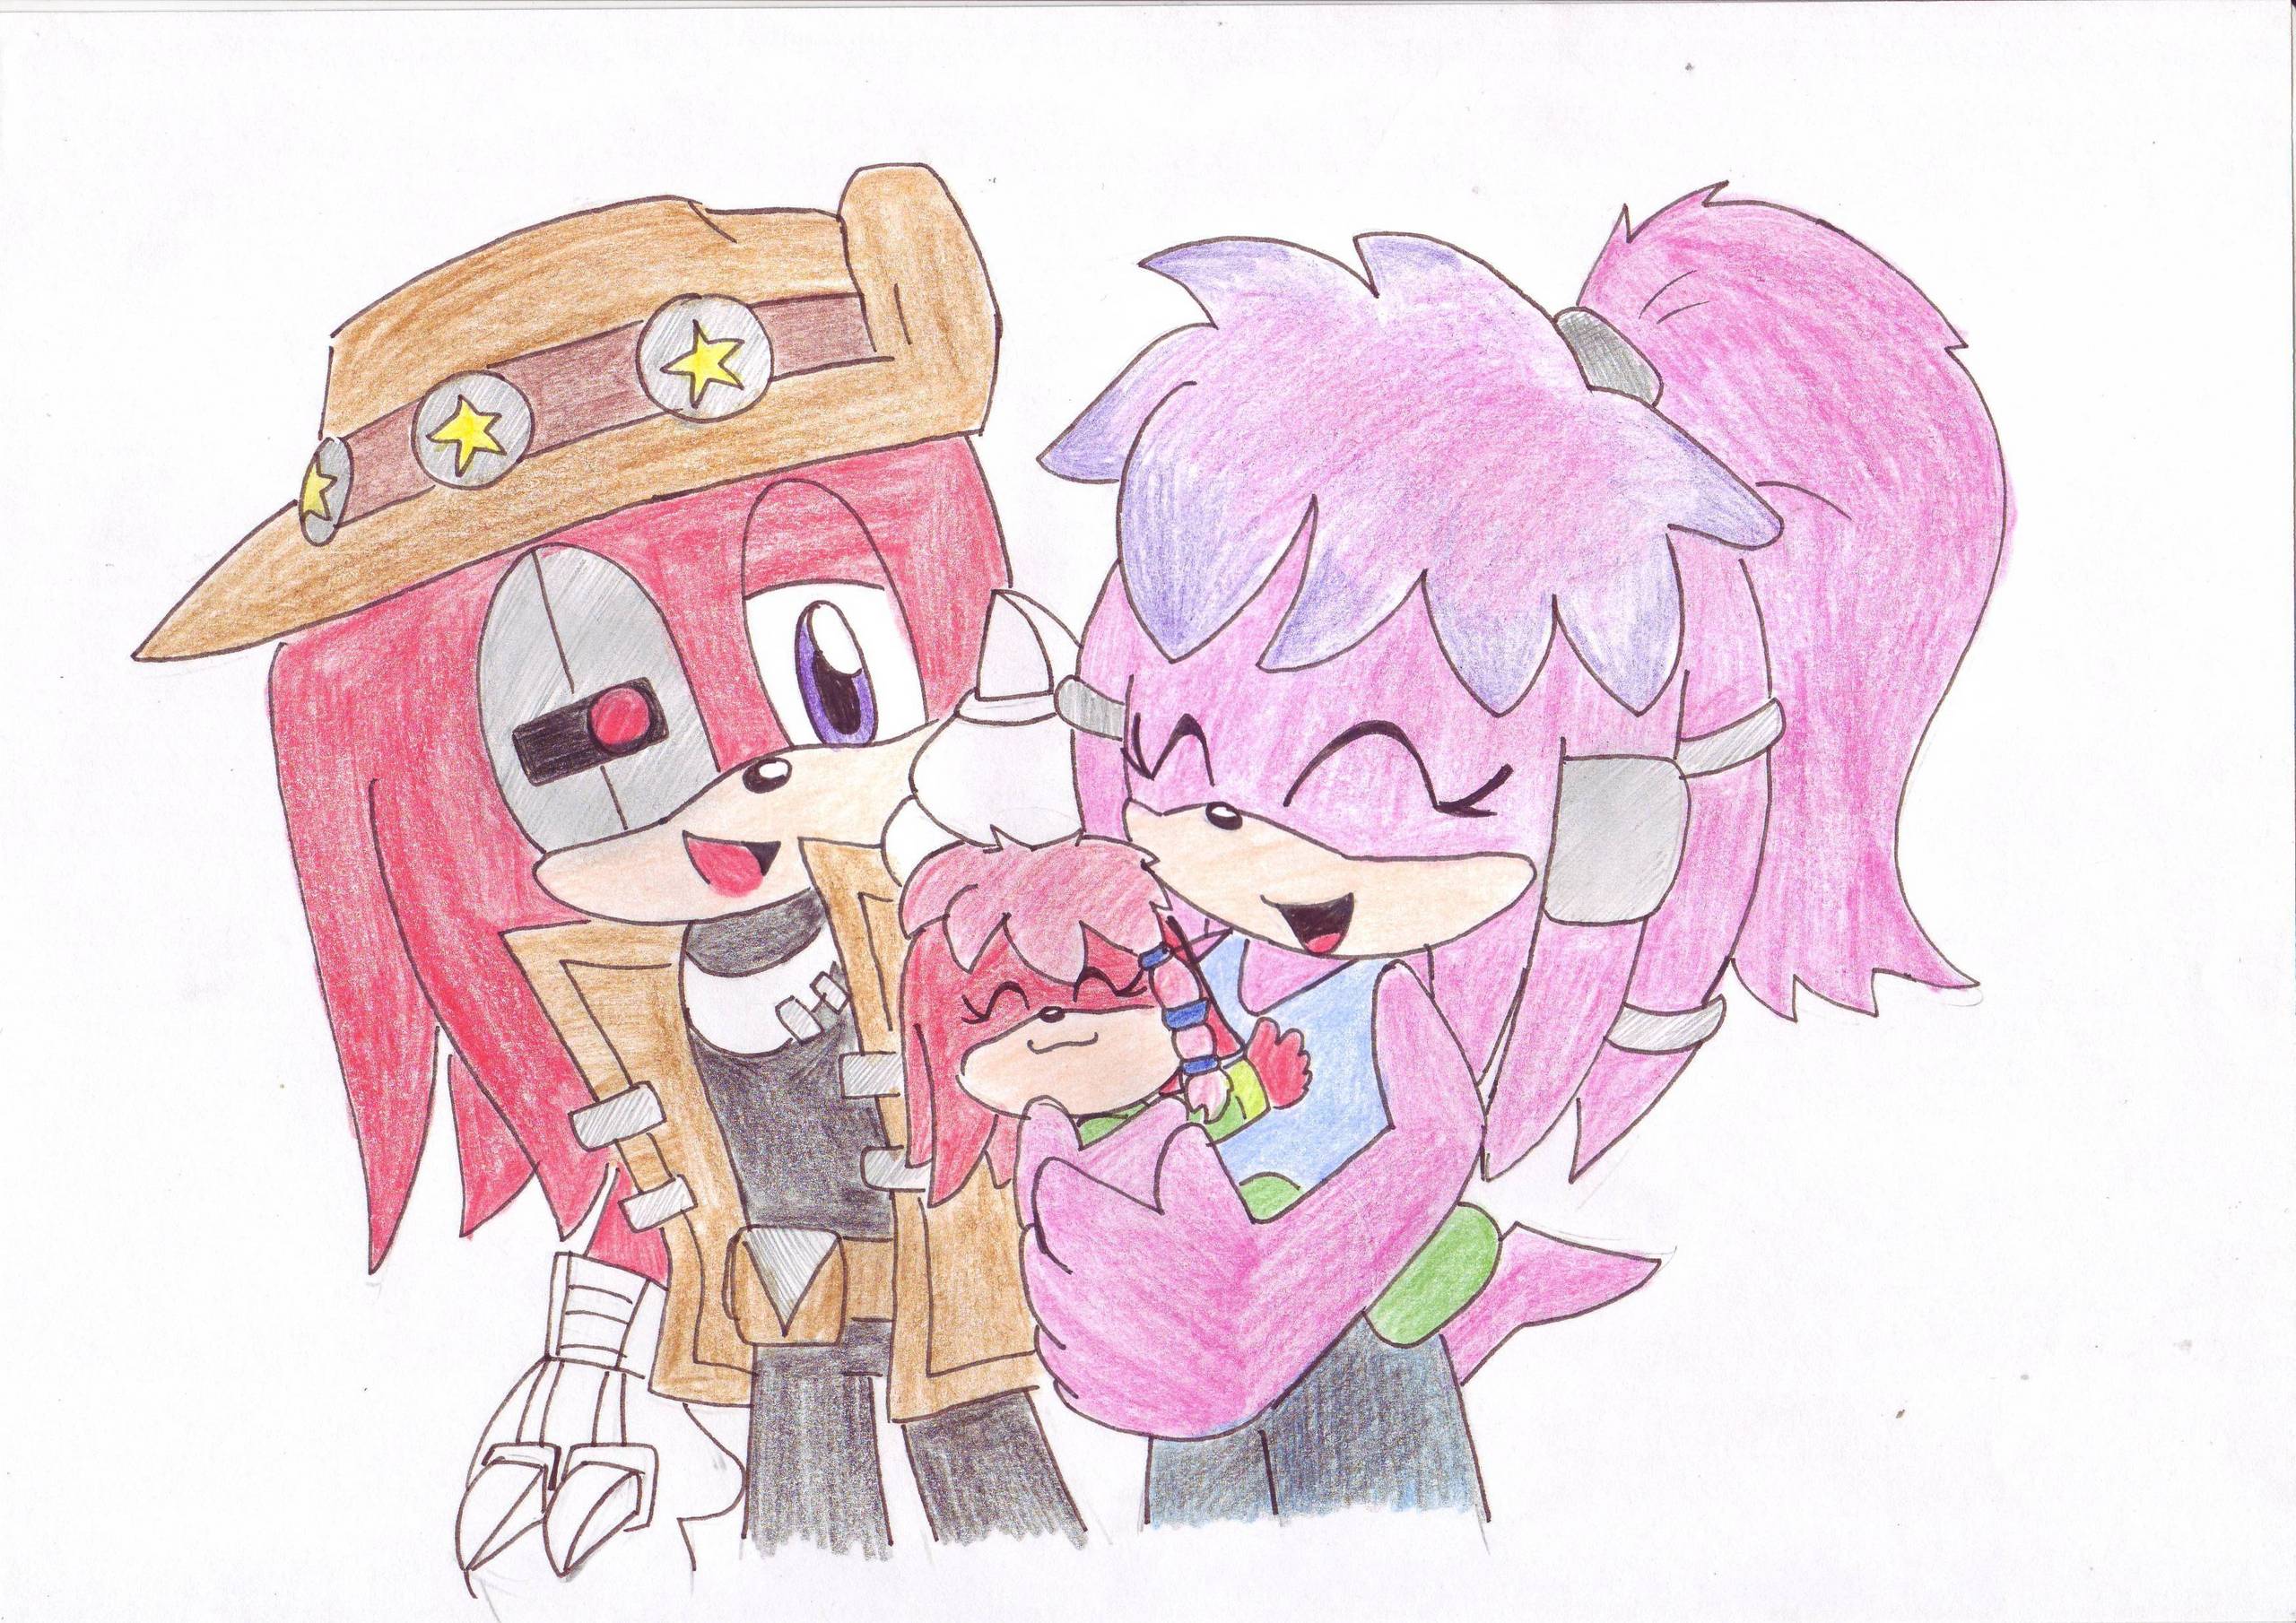 Knuckles and Julie-Su holding Lara-Su.